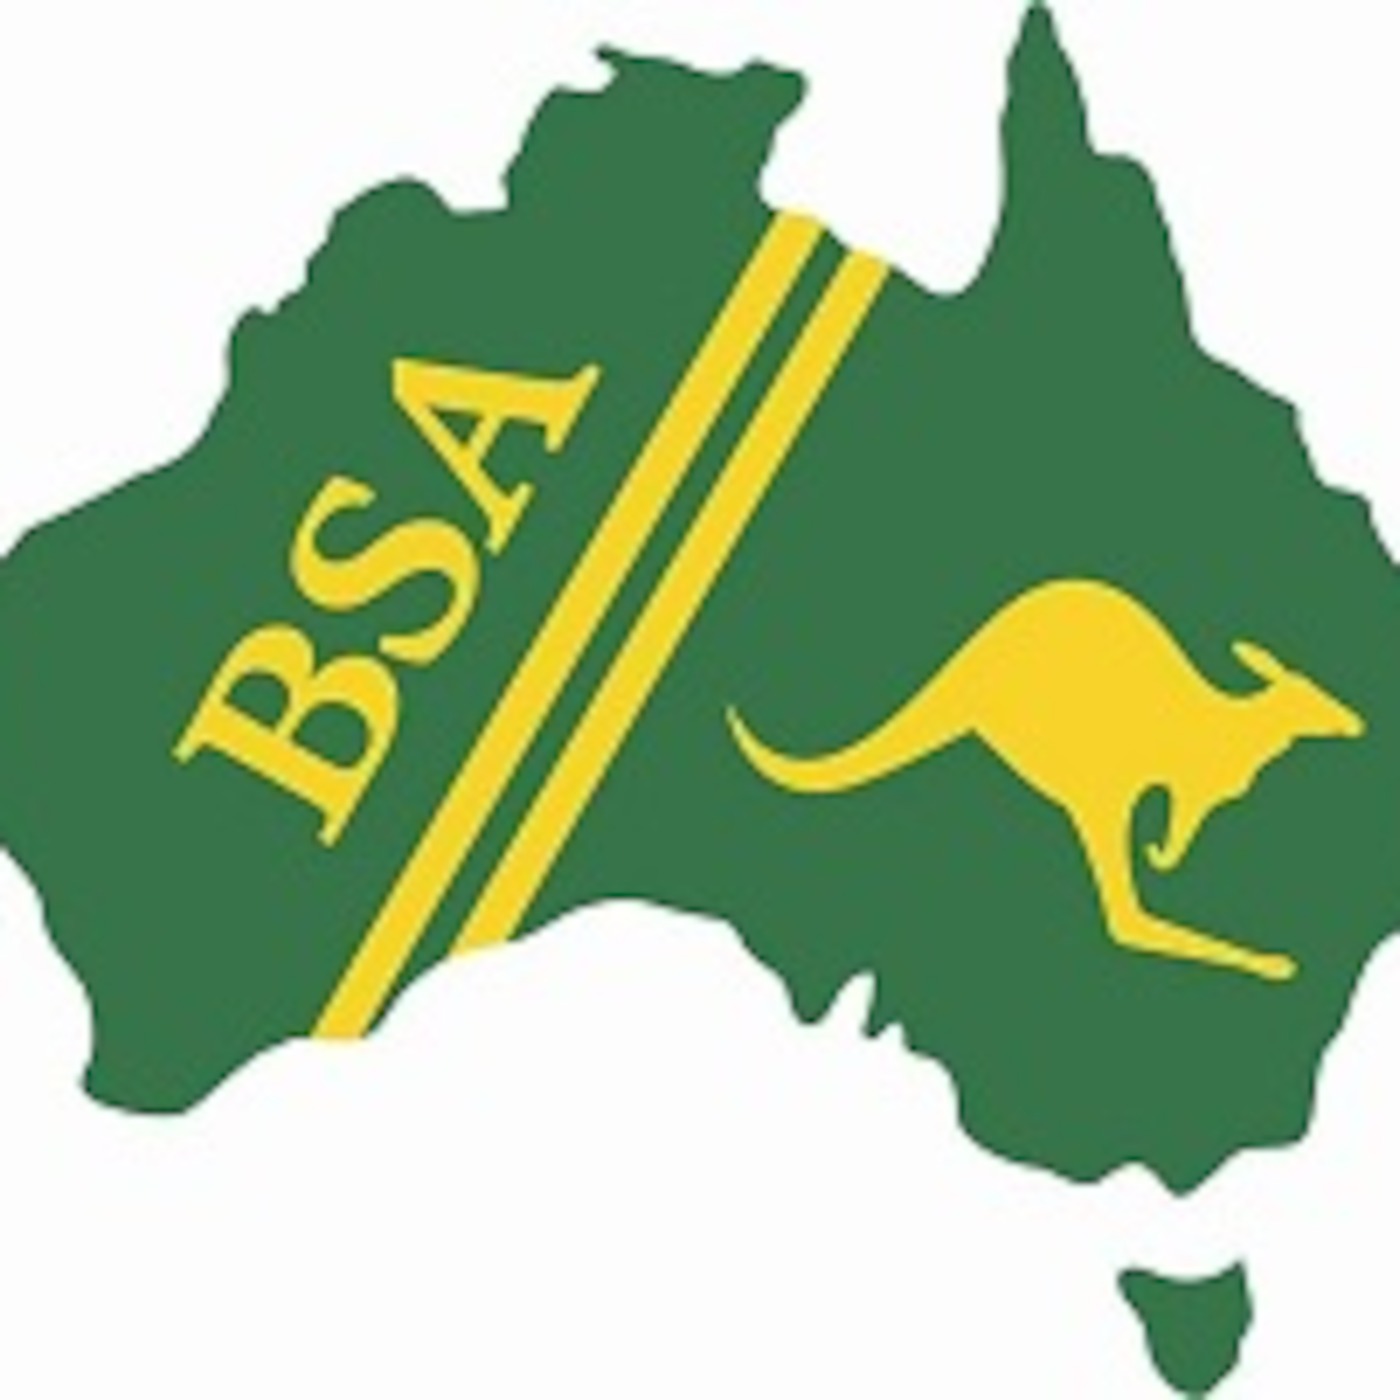 Blind Sports Australia newsletters